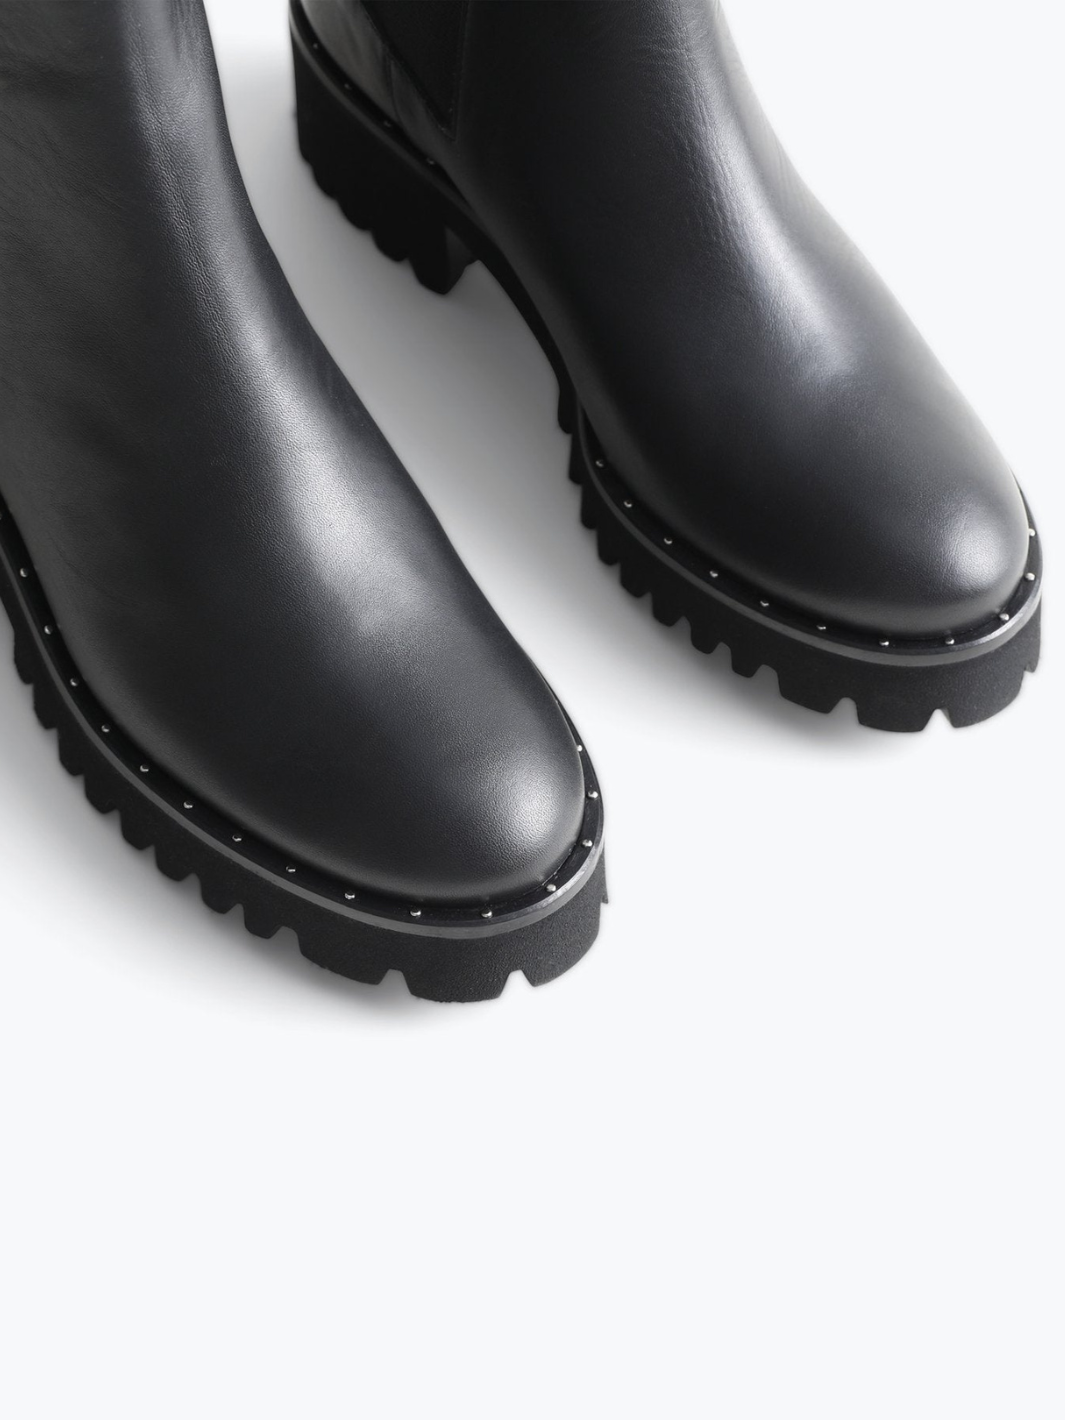 BROOKE RAIN RESISTANT BOOT IN BLACK CALF - Romi Boutique